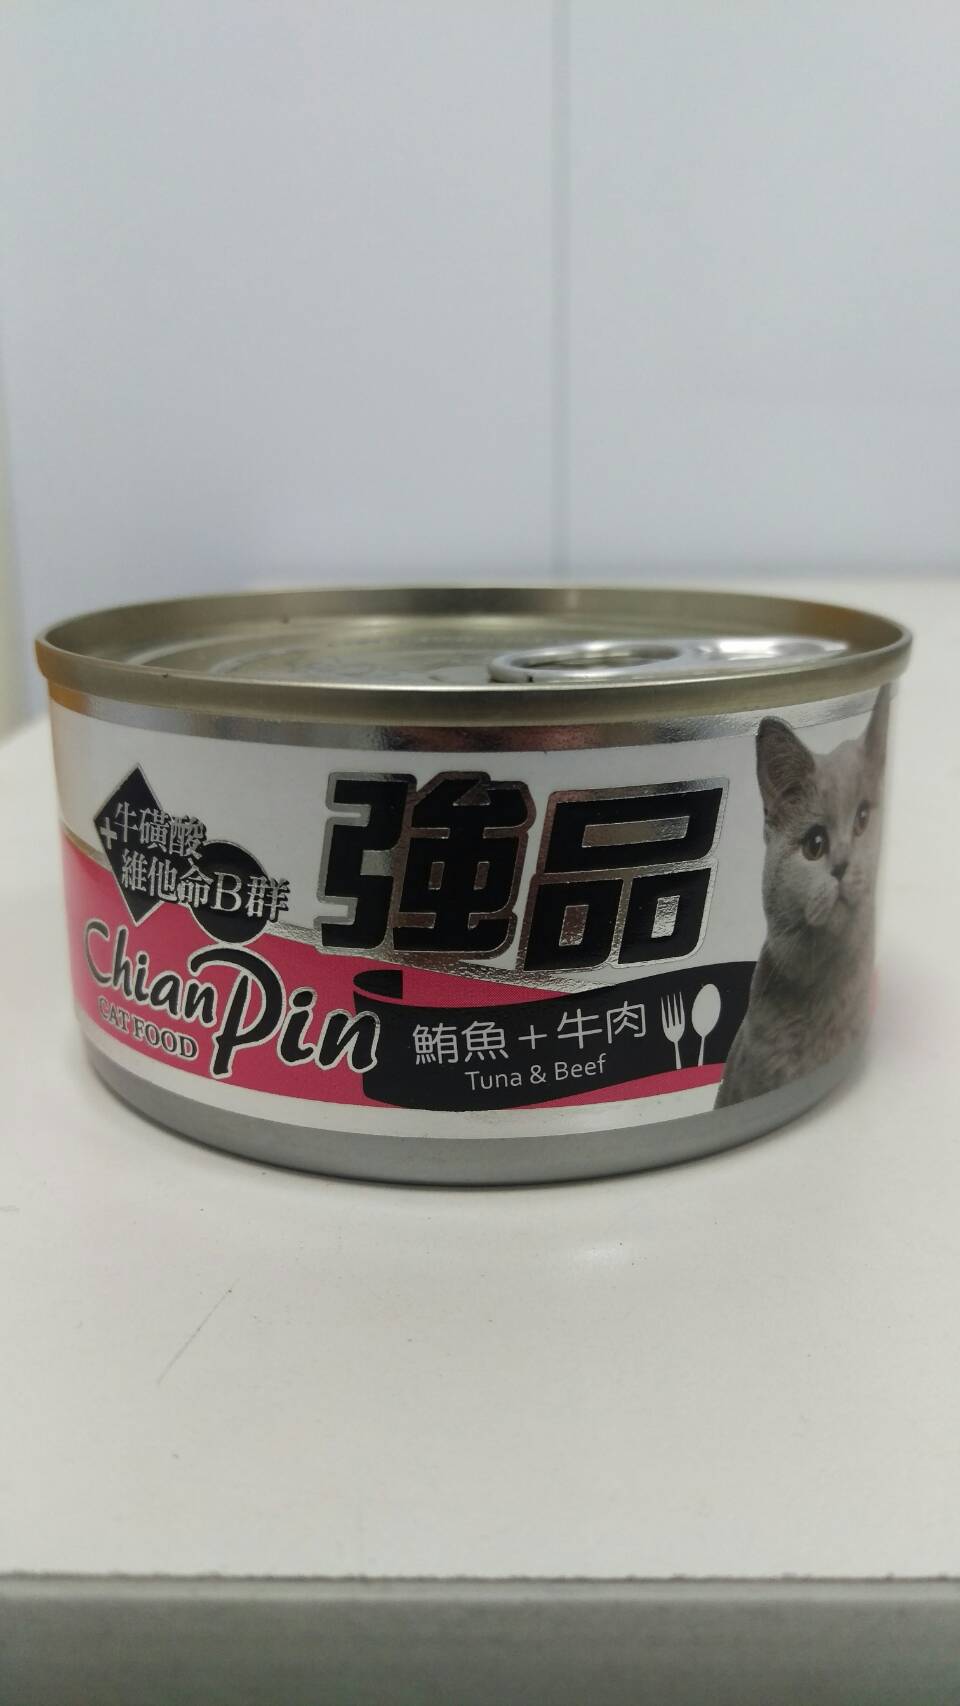 強品貓罐-鮪魚+牛肉
Chian Pin cat can- tuna+beef